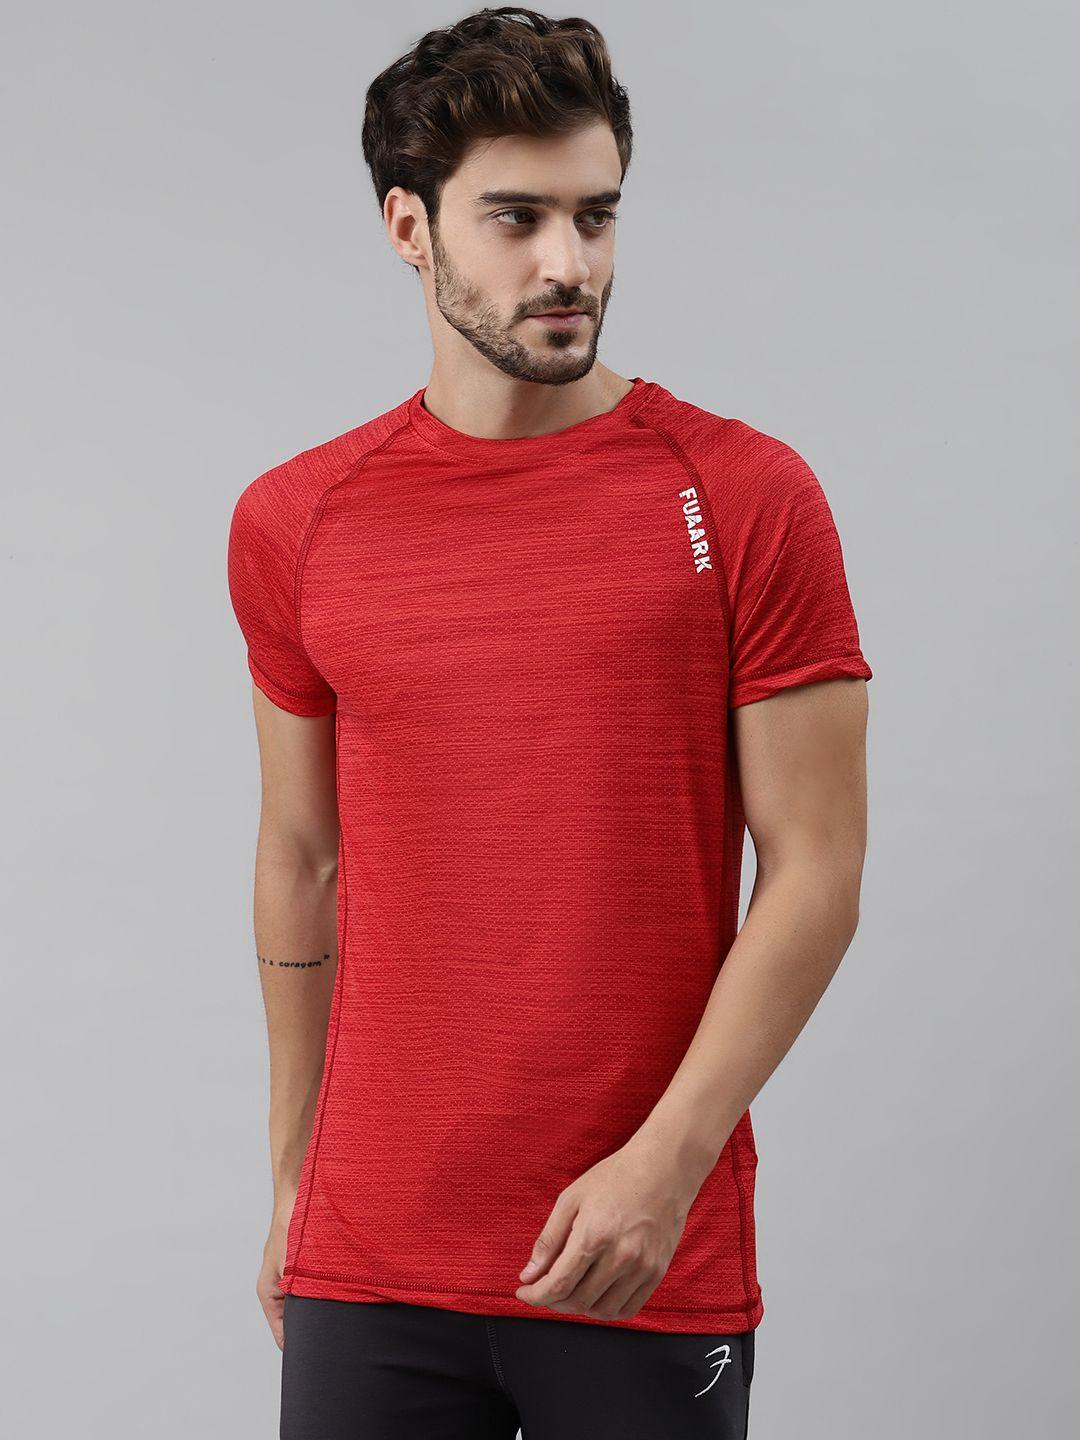 fuaark men red slim fit self design round neck training t-shirt